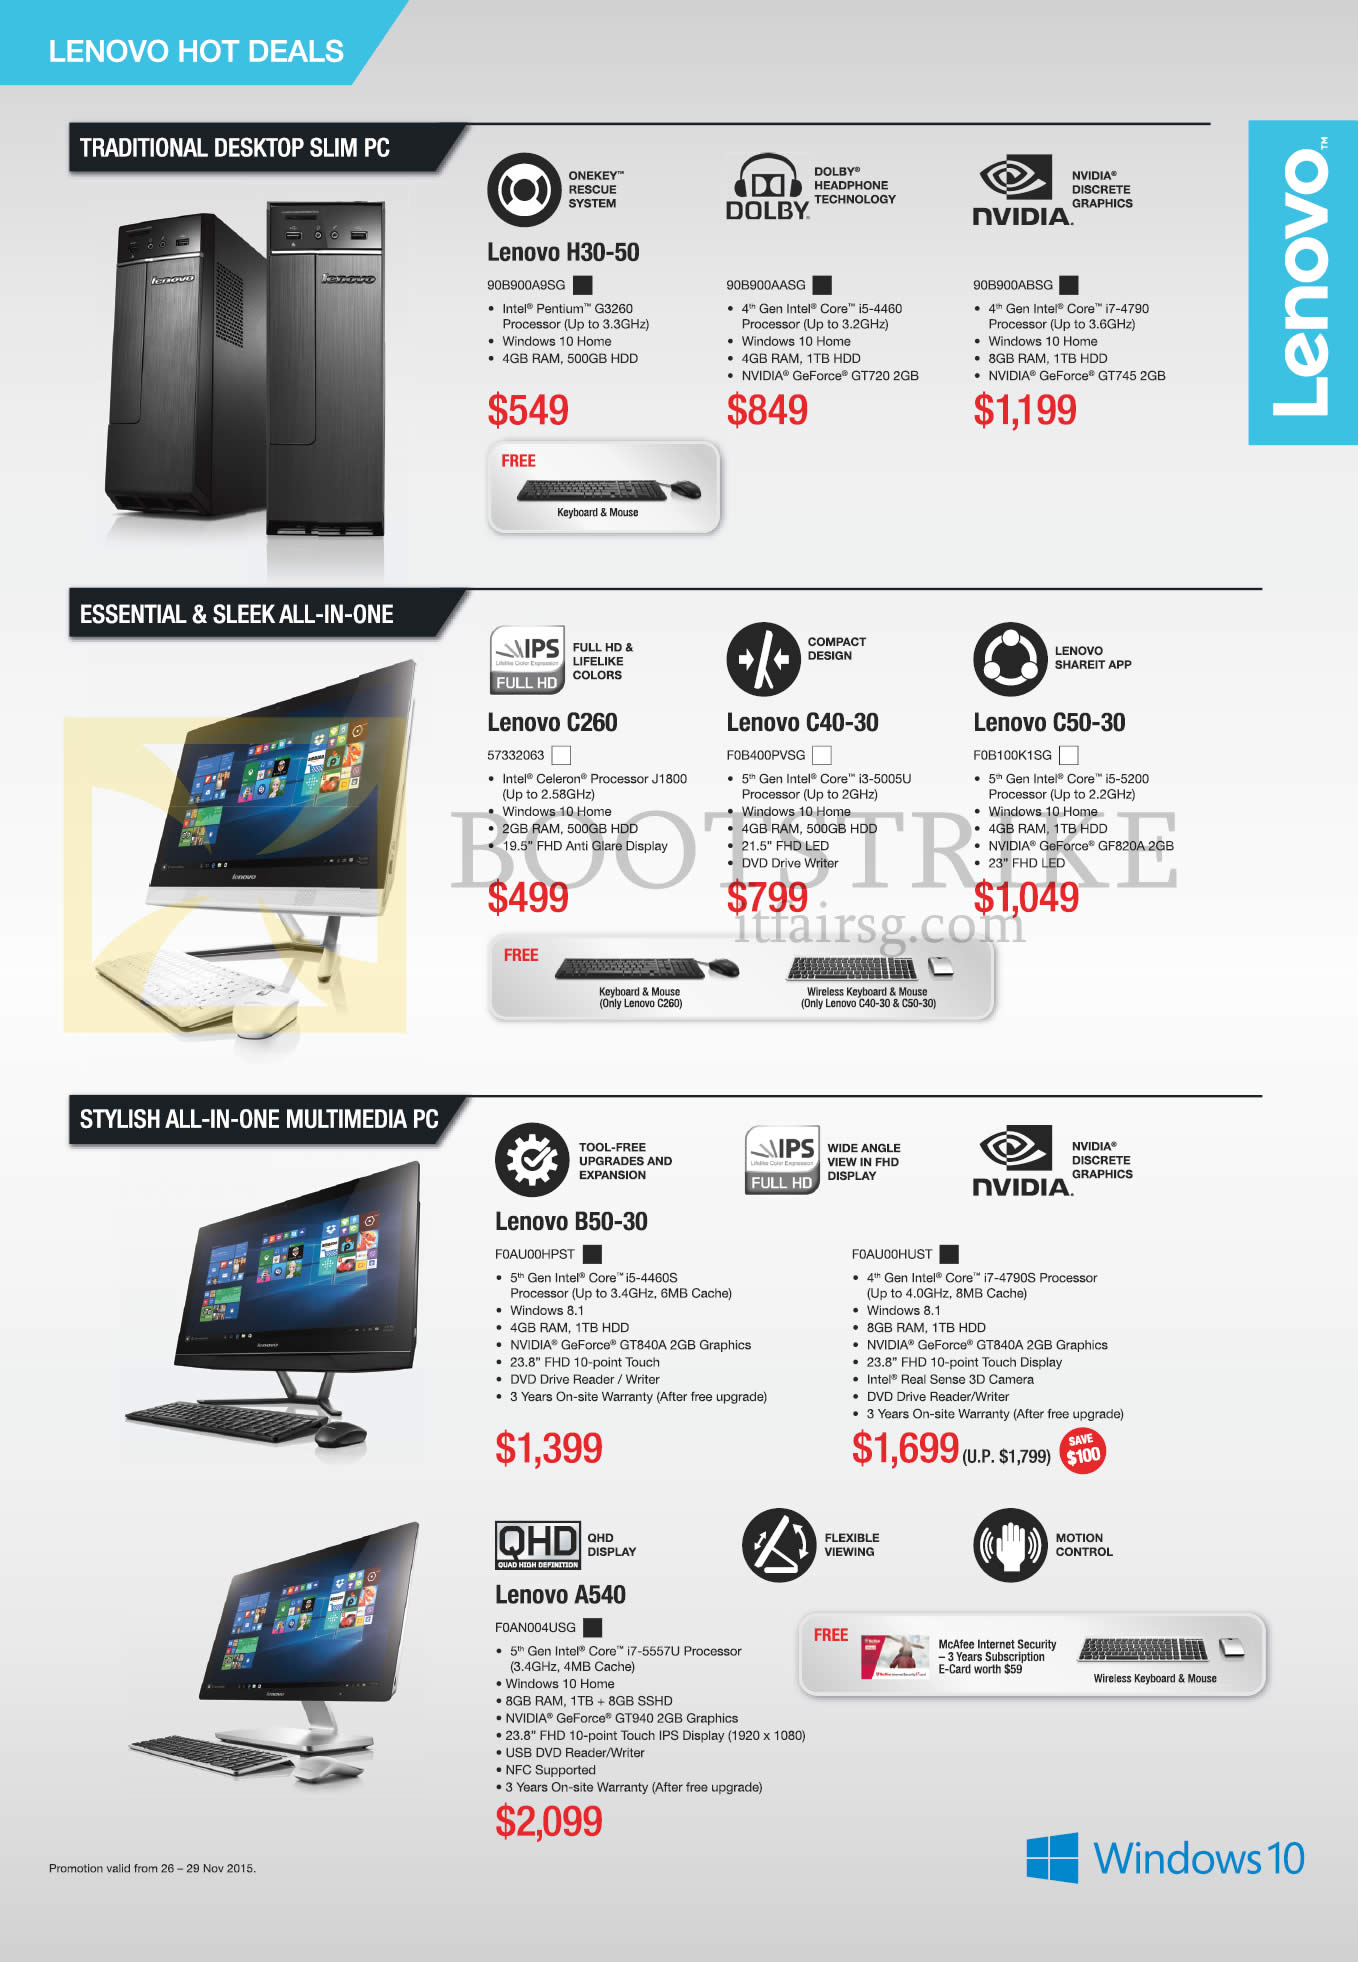 SITEX 2015 price list image brochure of Lenovo Desktop PCs, AIO Desktop PCs, Lenovo H30-50 90B900A9SG, 90B900AASG, 90B900ABSG, Lenovo C260, C40-30, C50-30, B50-30 FOAUOOHPST, FOAUOOHUST, A540 F0AN004USG